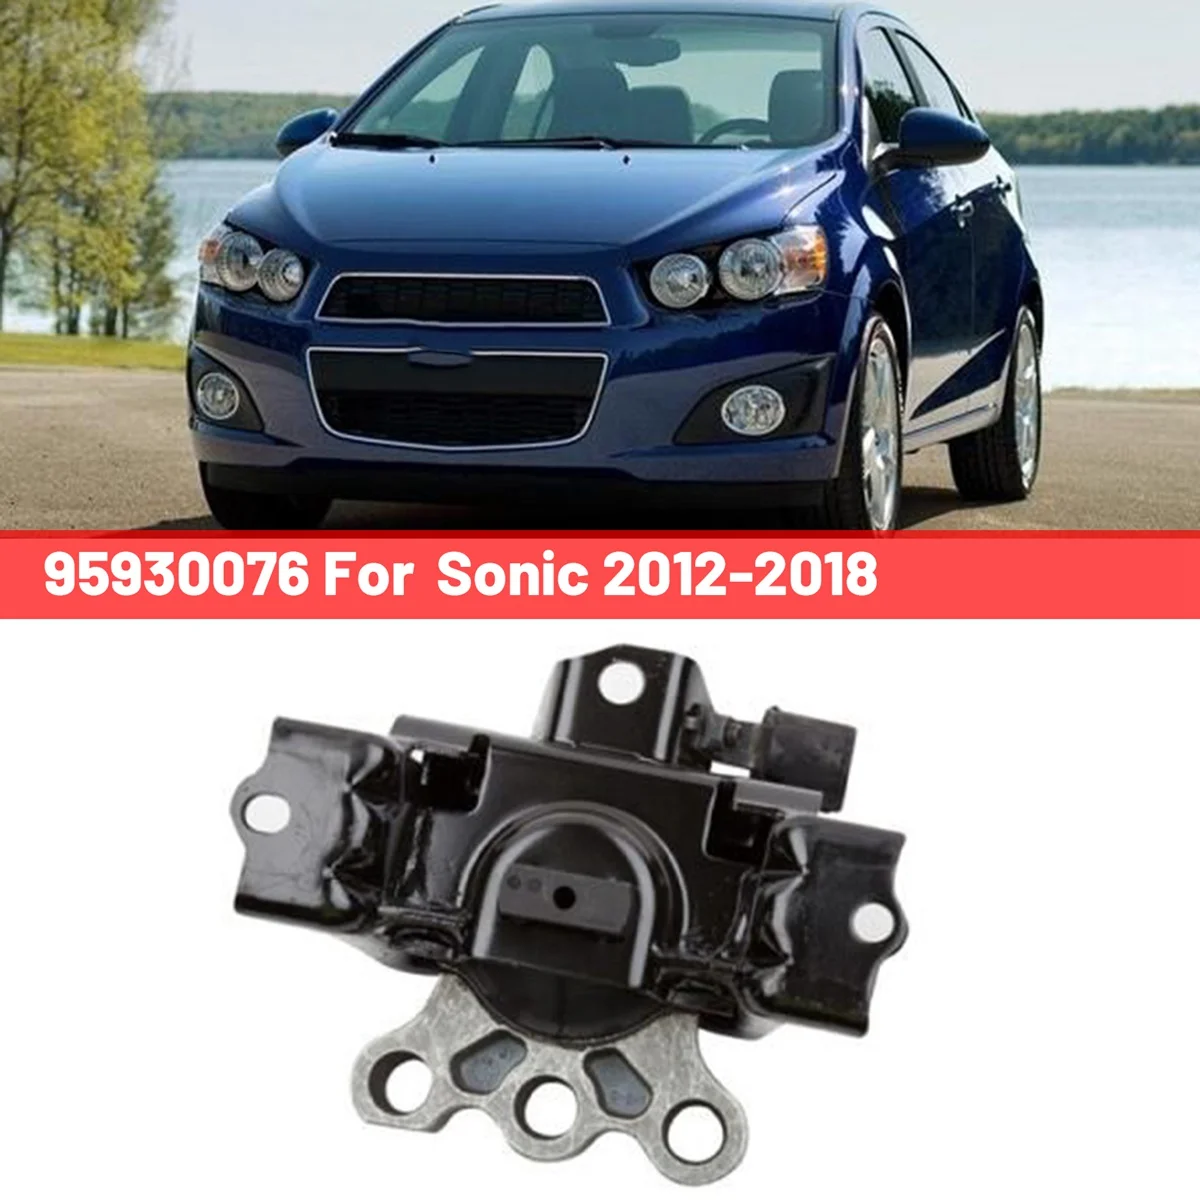 95930076 Motor Suport Motor Jos Suport Cauciuc Auto pentru Sonic 2012-2018